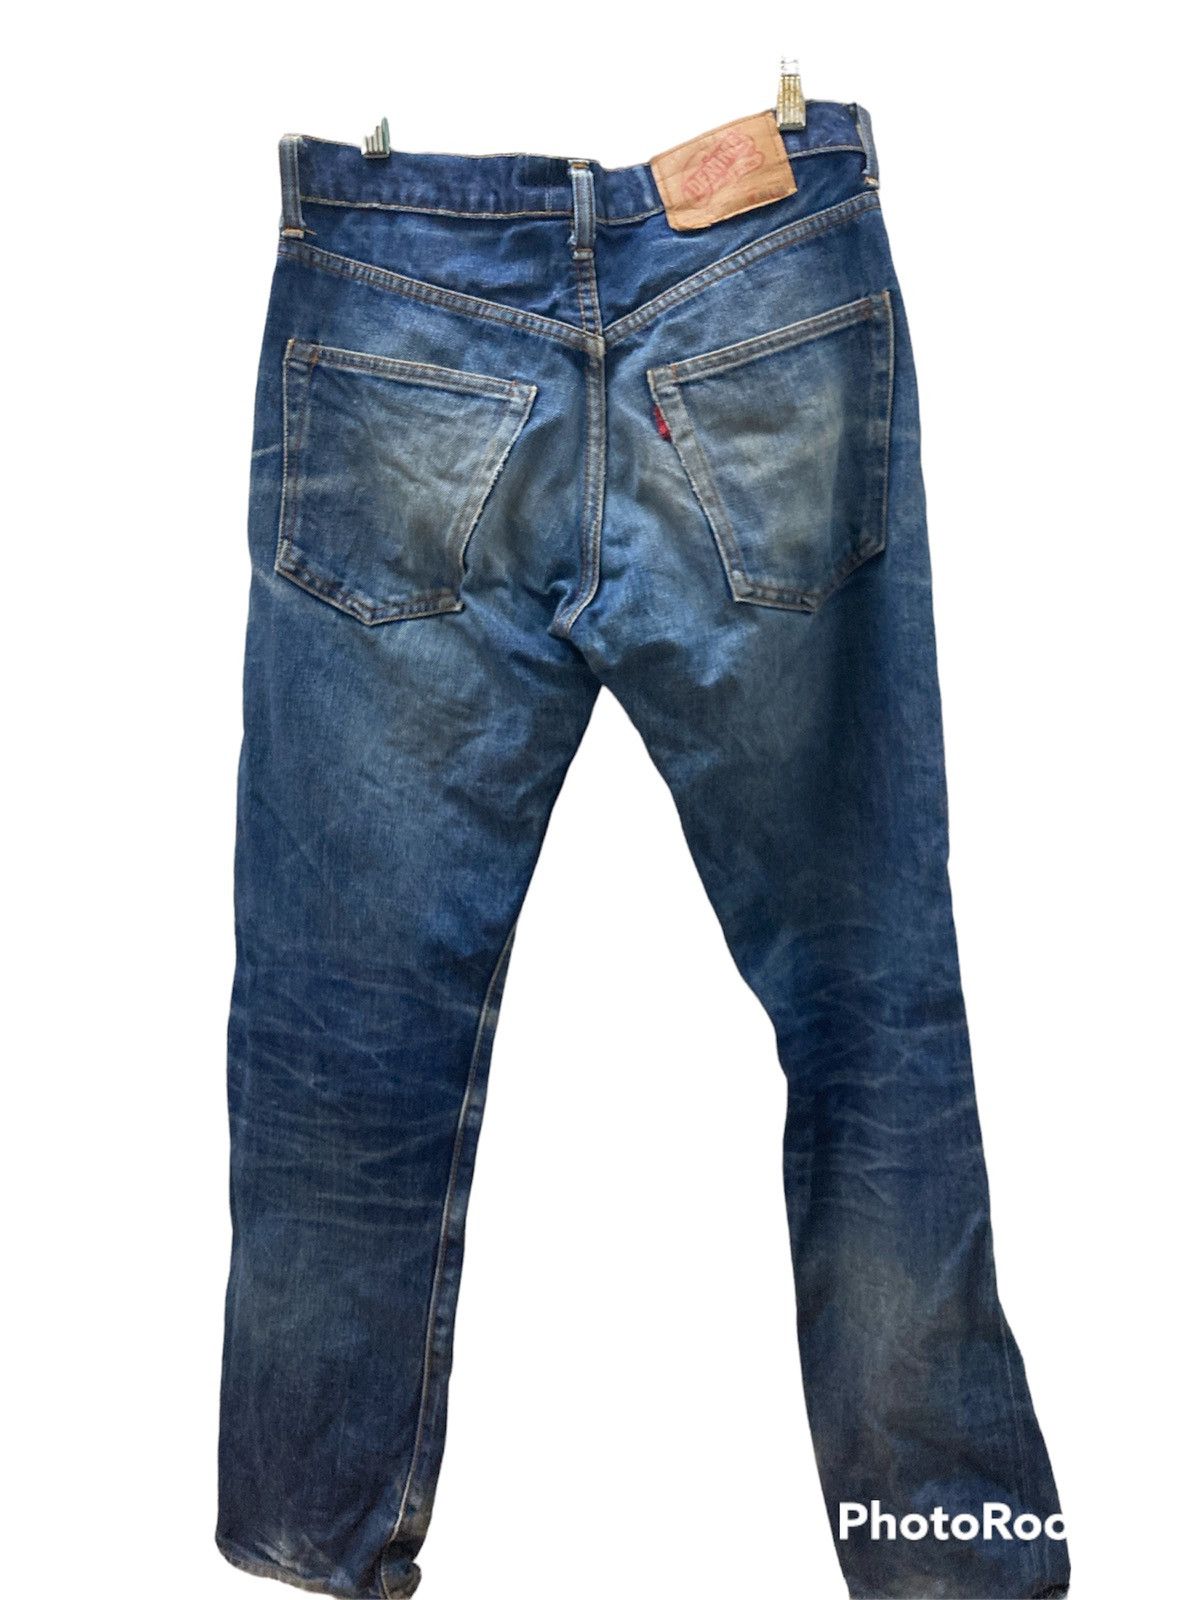 Denime Vintage denime jeans Size US 30 / EU 46 - 2 Preview